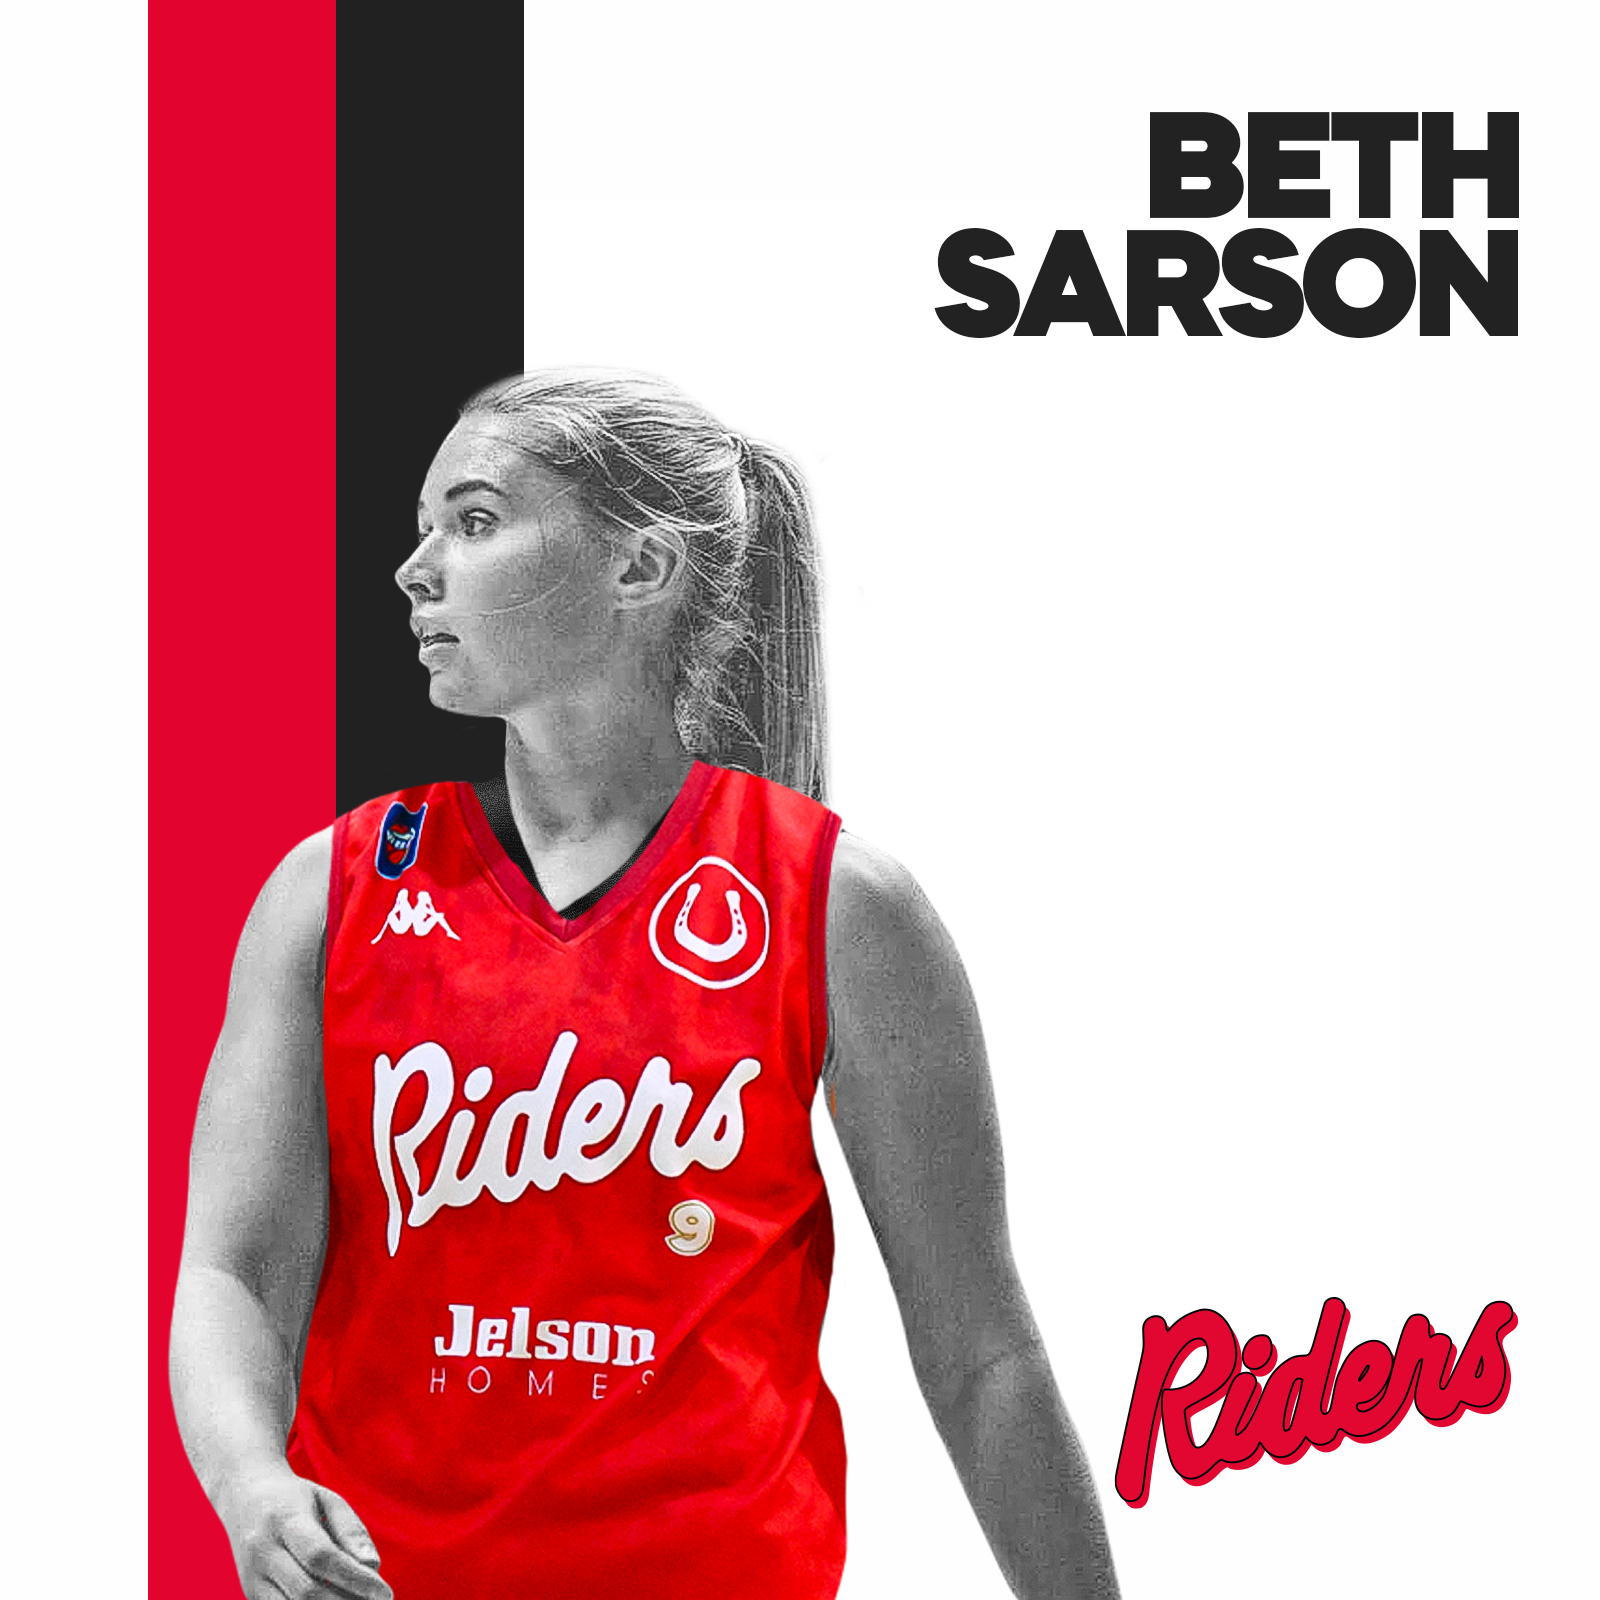 Beth Sarson